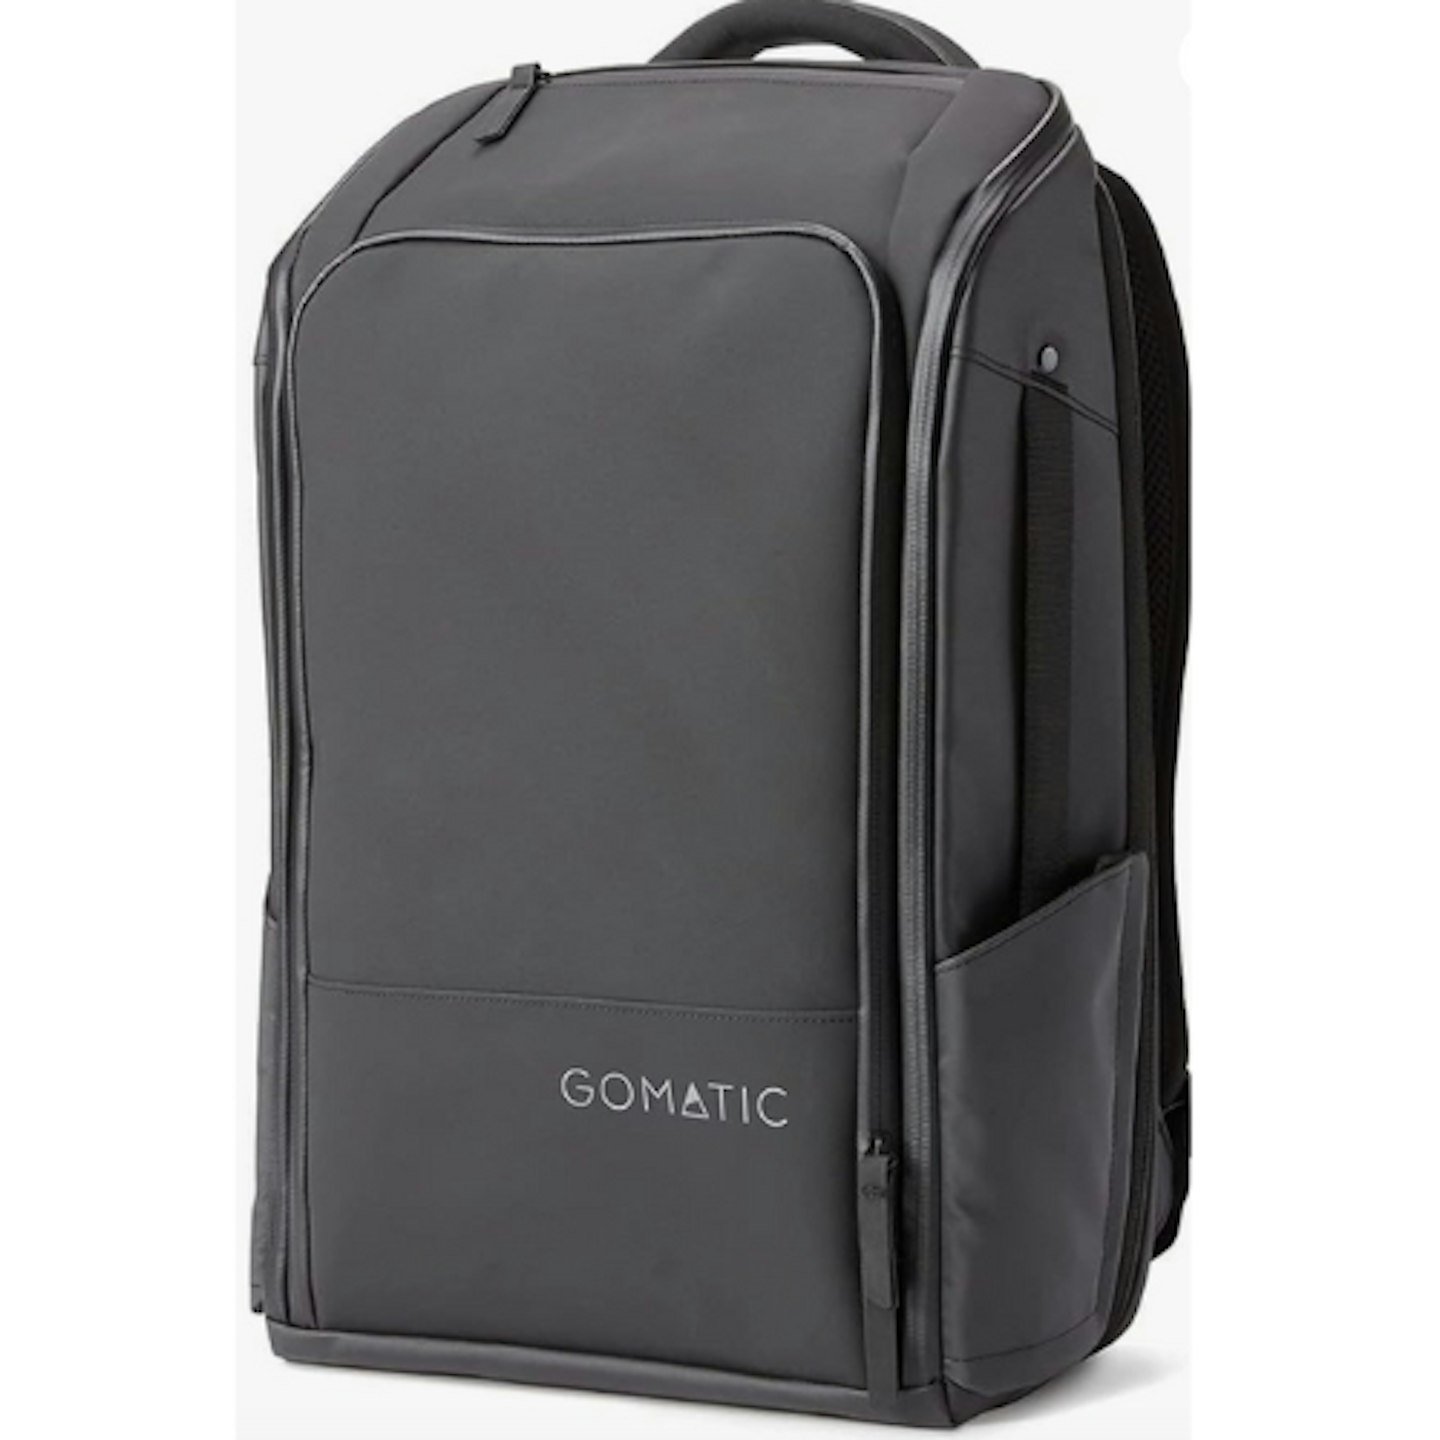 Gomatic Laptop Bag Backpack